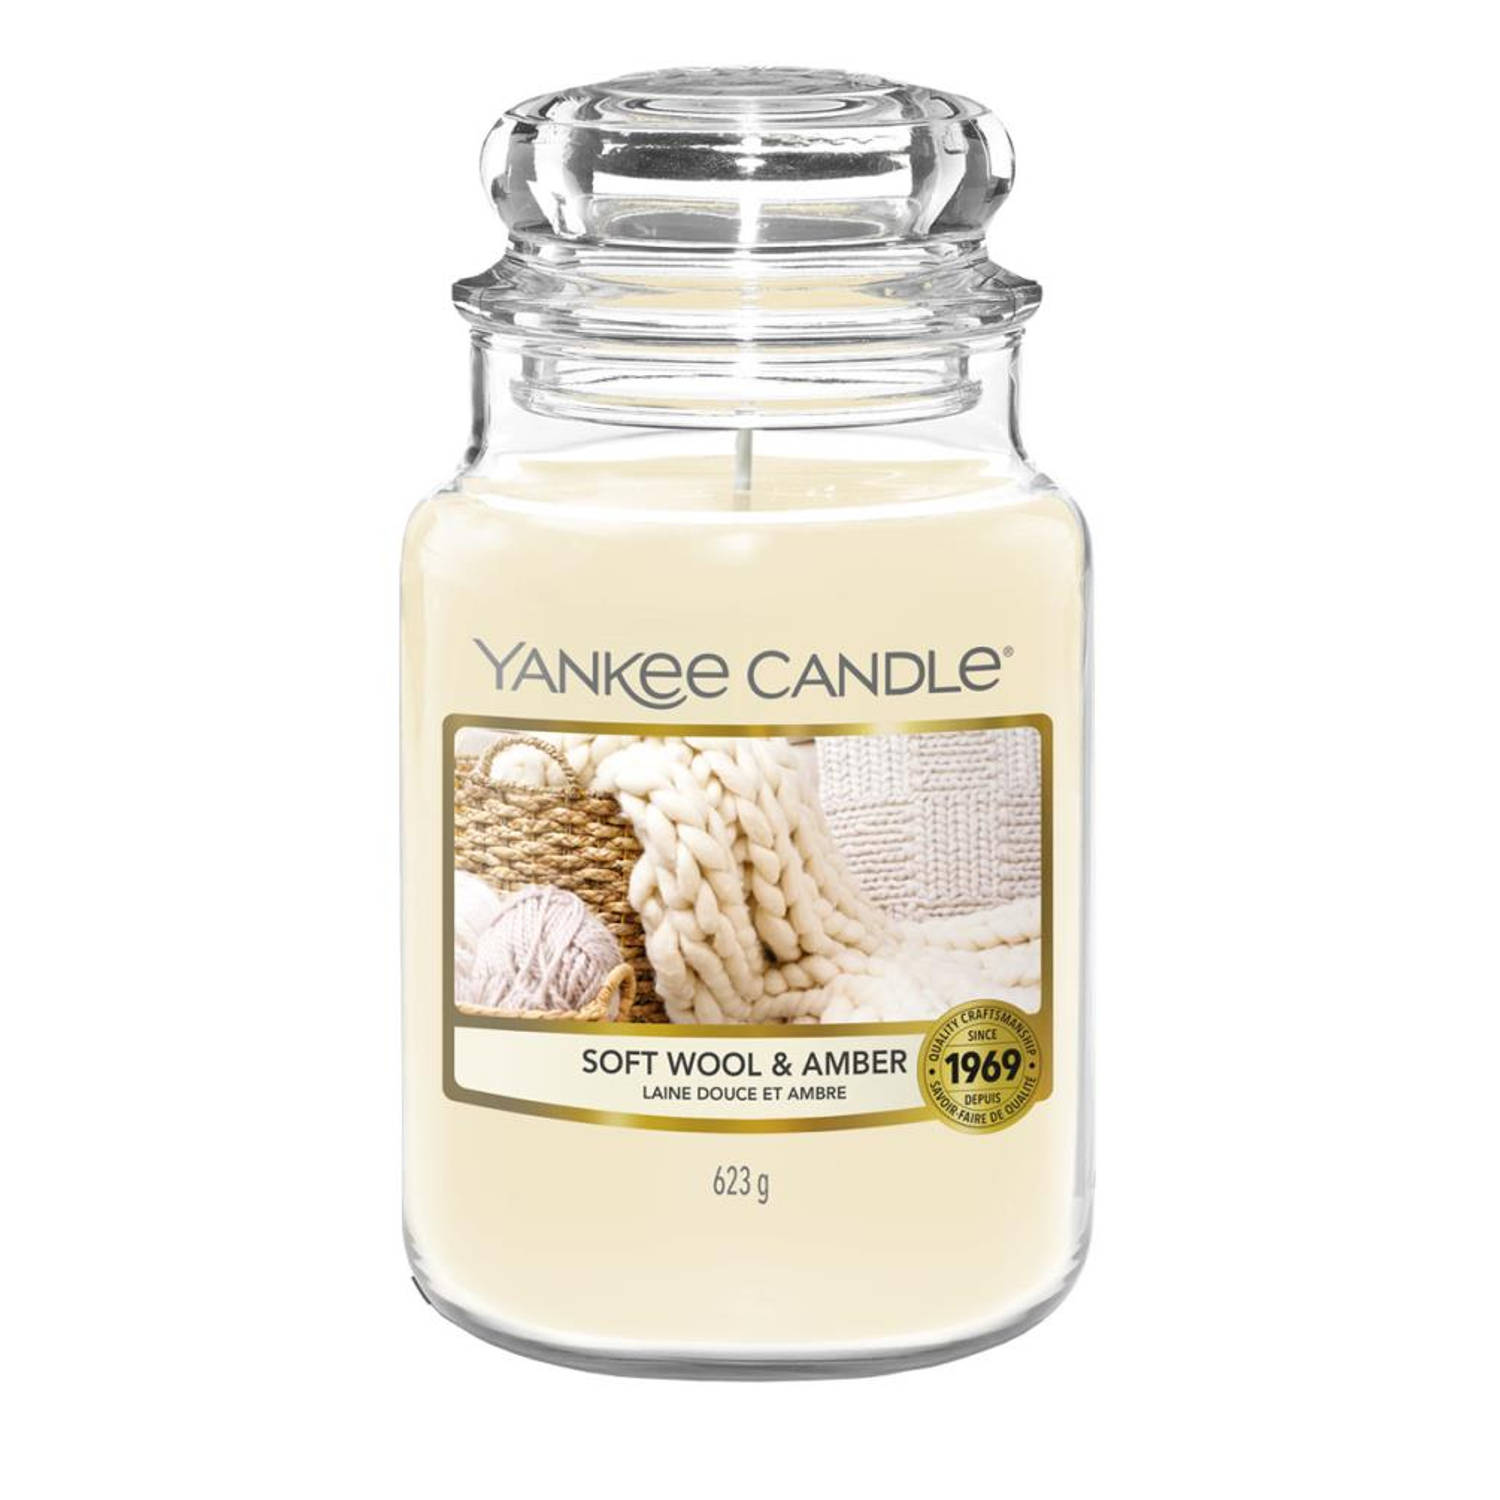 Yankee Candle - Soft Wool & Amber Large Jar